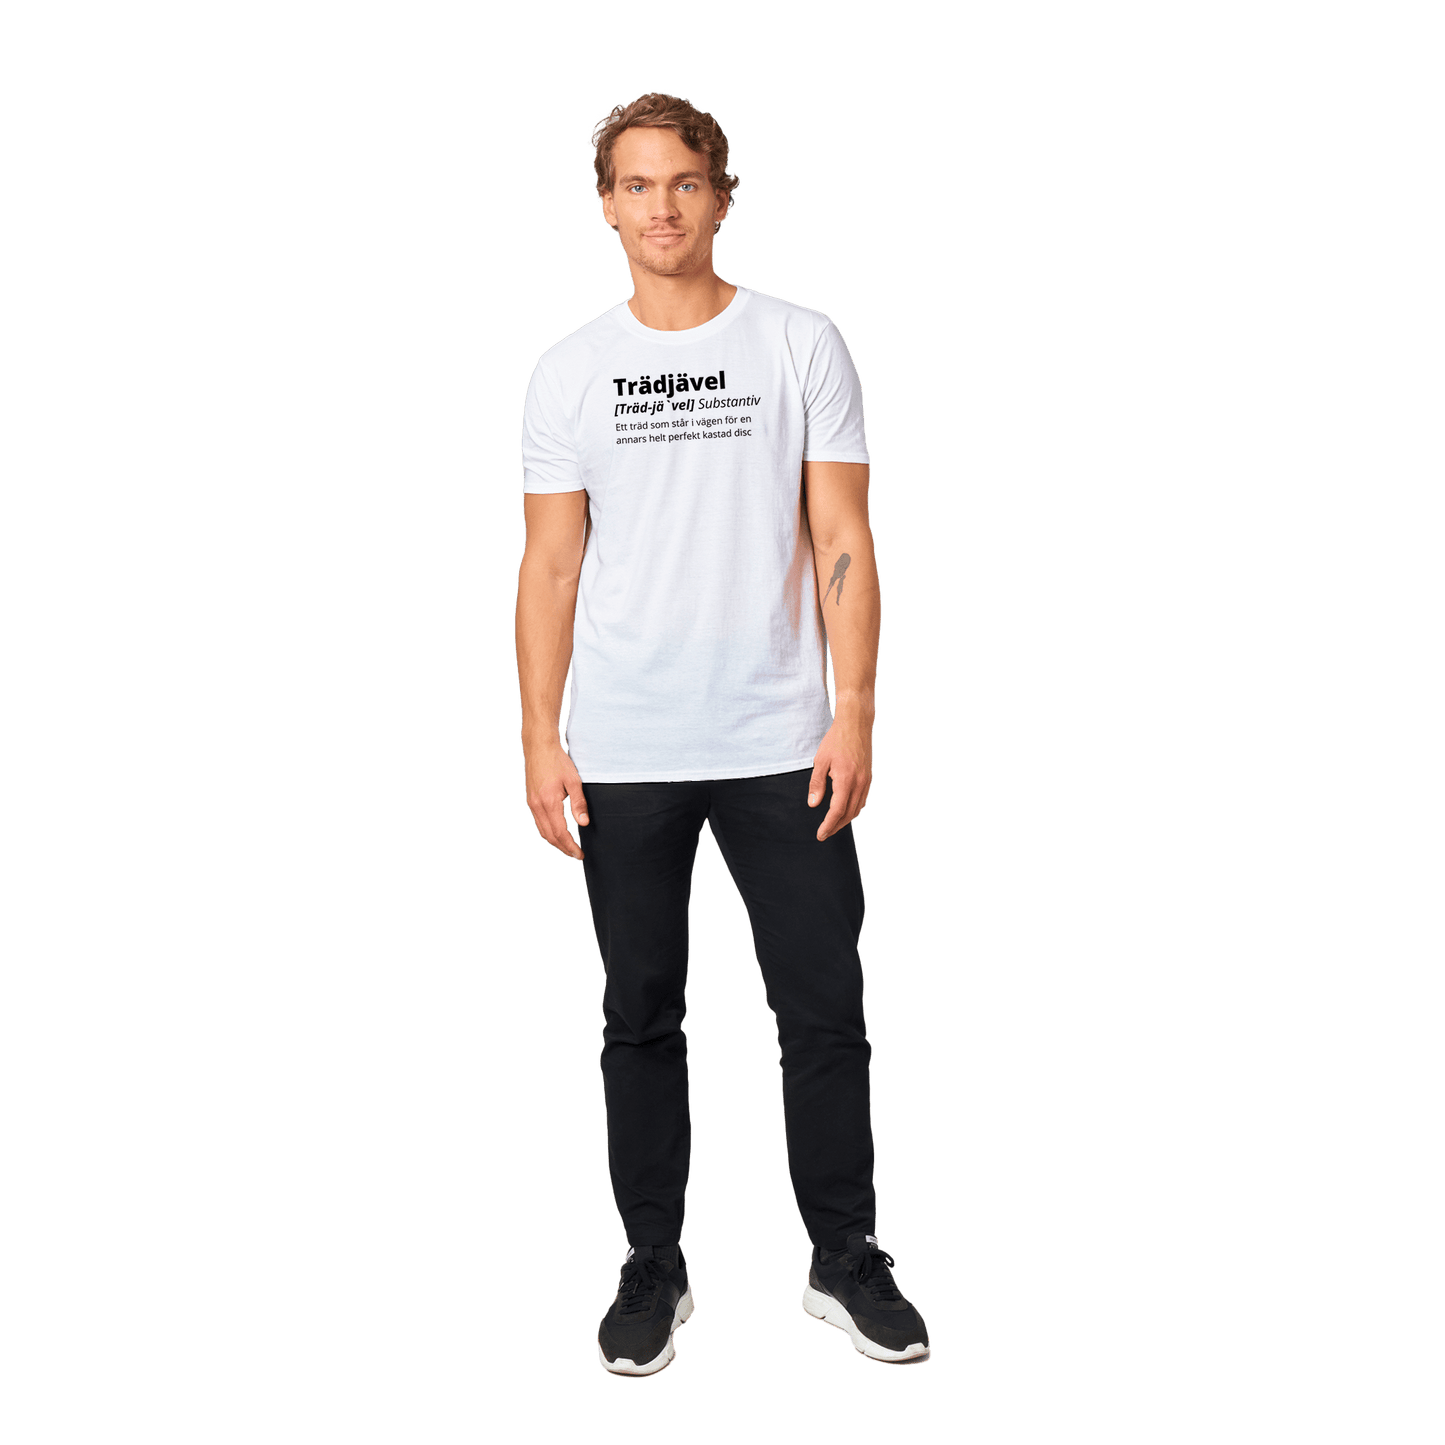 Trädjävel Discgolf - T-shirt 